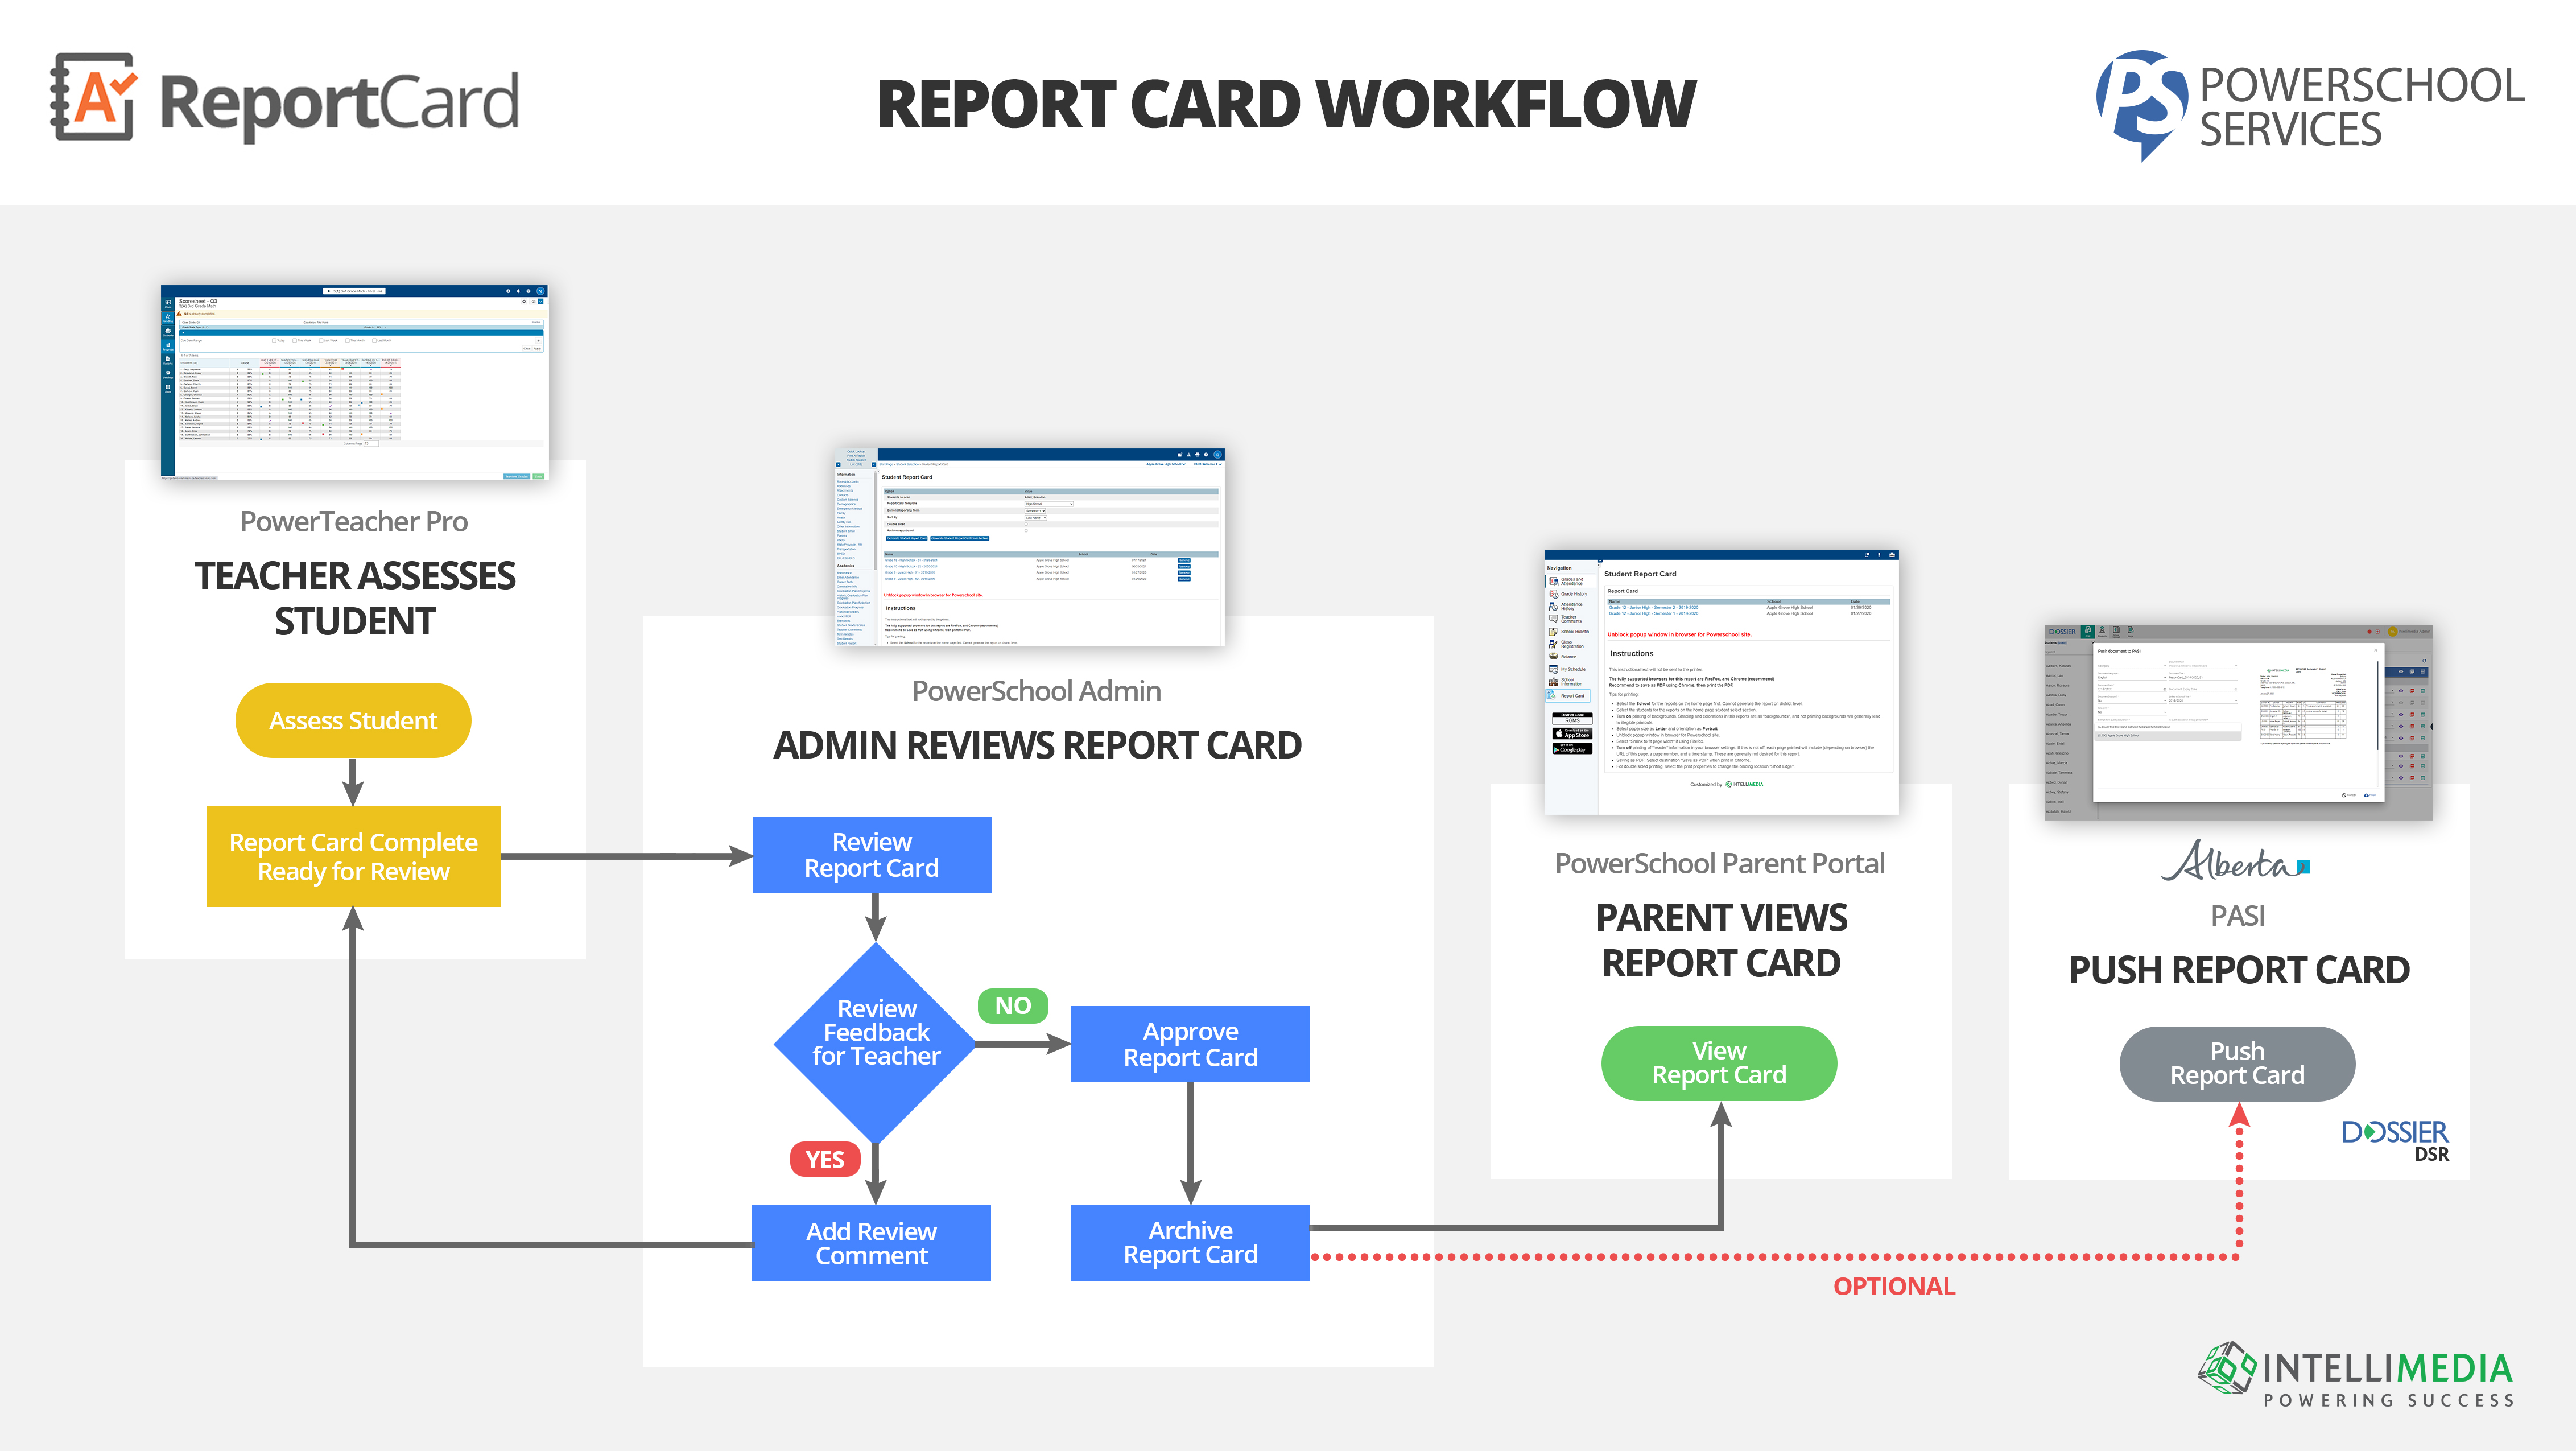 Intellimedia PowerSchool Services - Report Card Workflow